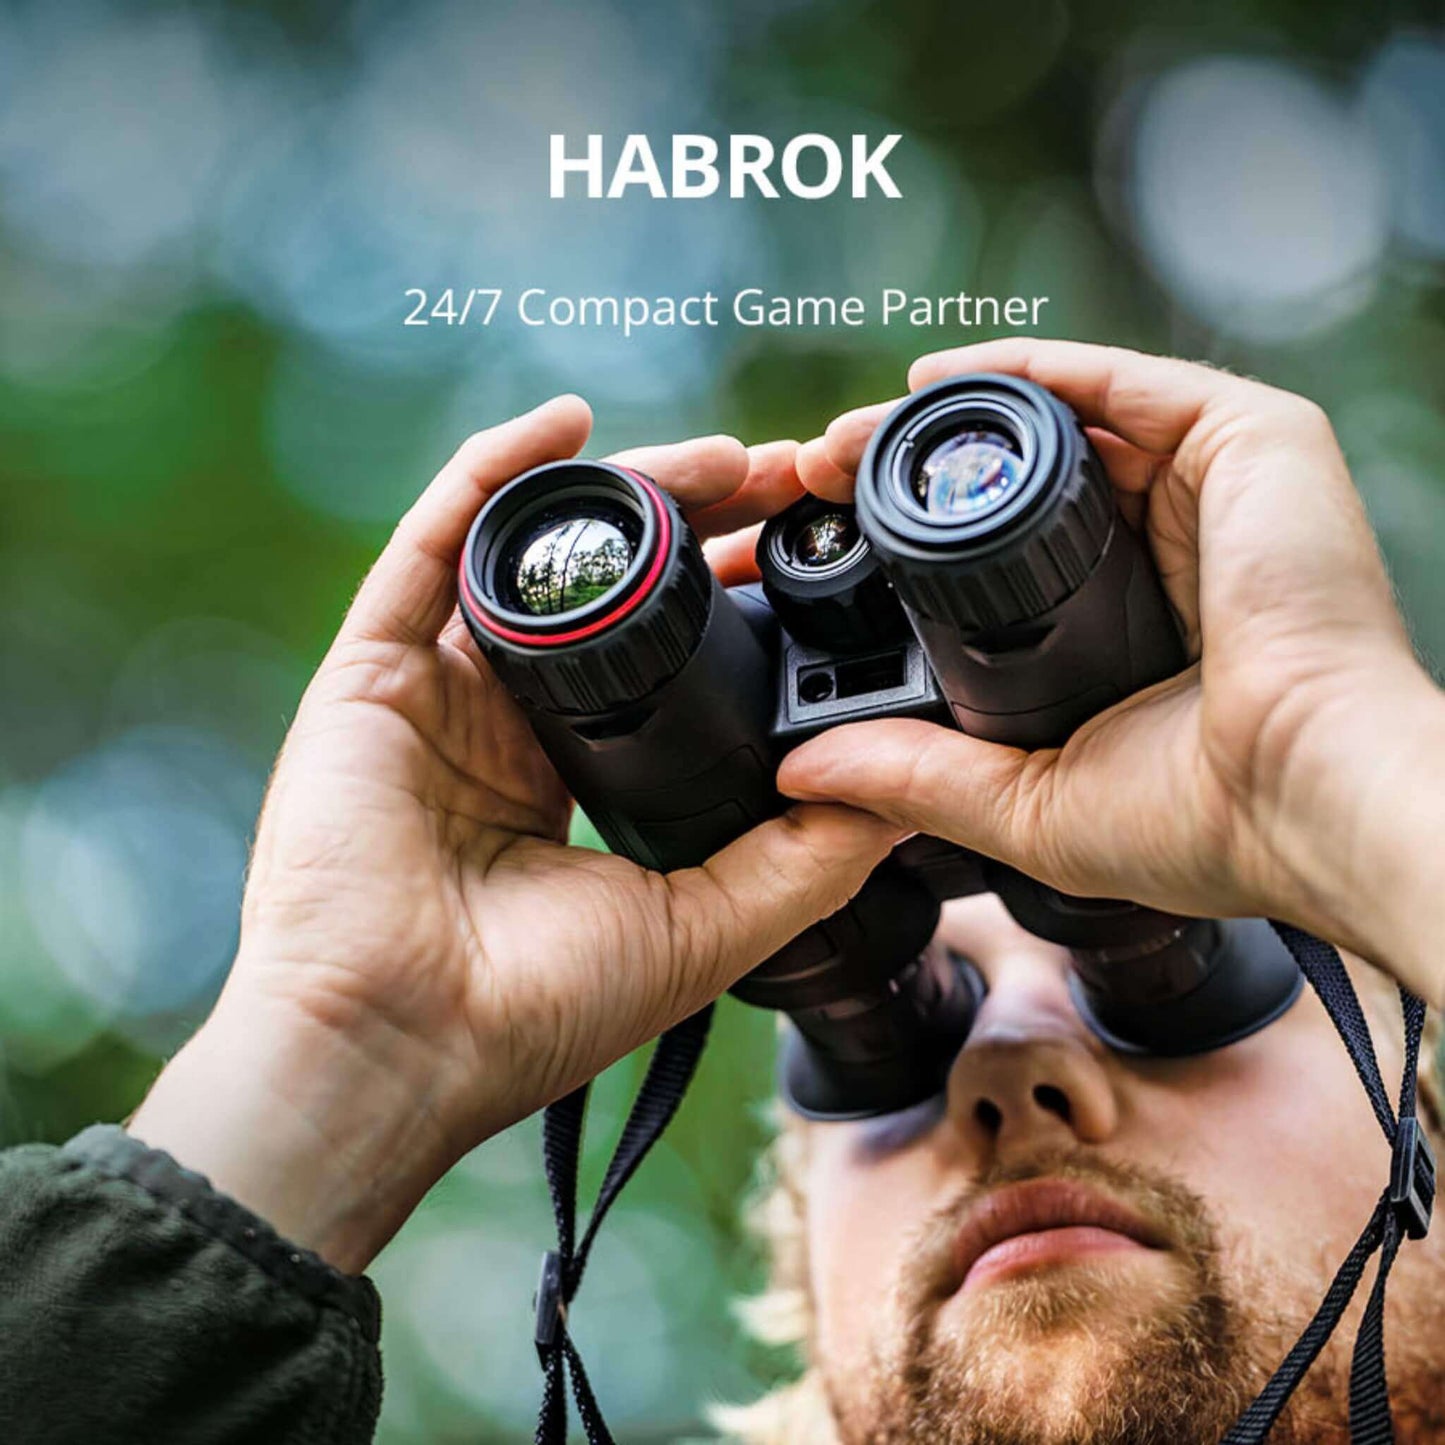 HikMicro Habrok HQ35L Multi-Function Night Vision Thermal Binoculars 24/7 Game Partner